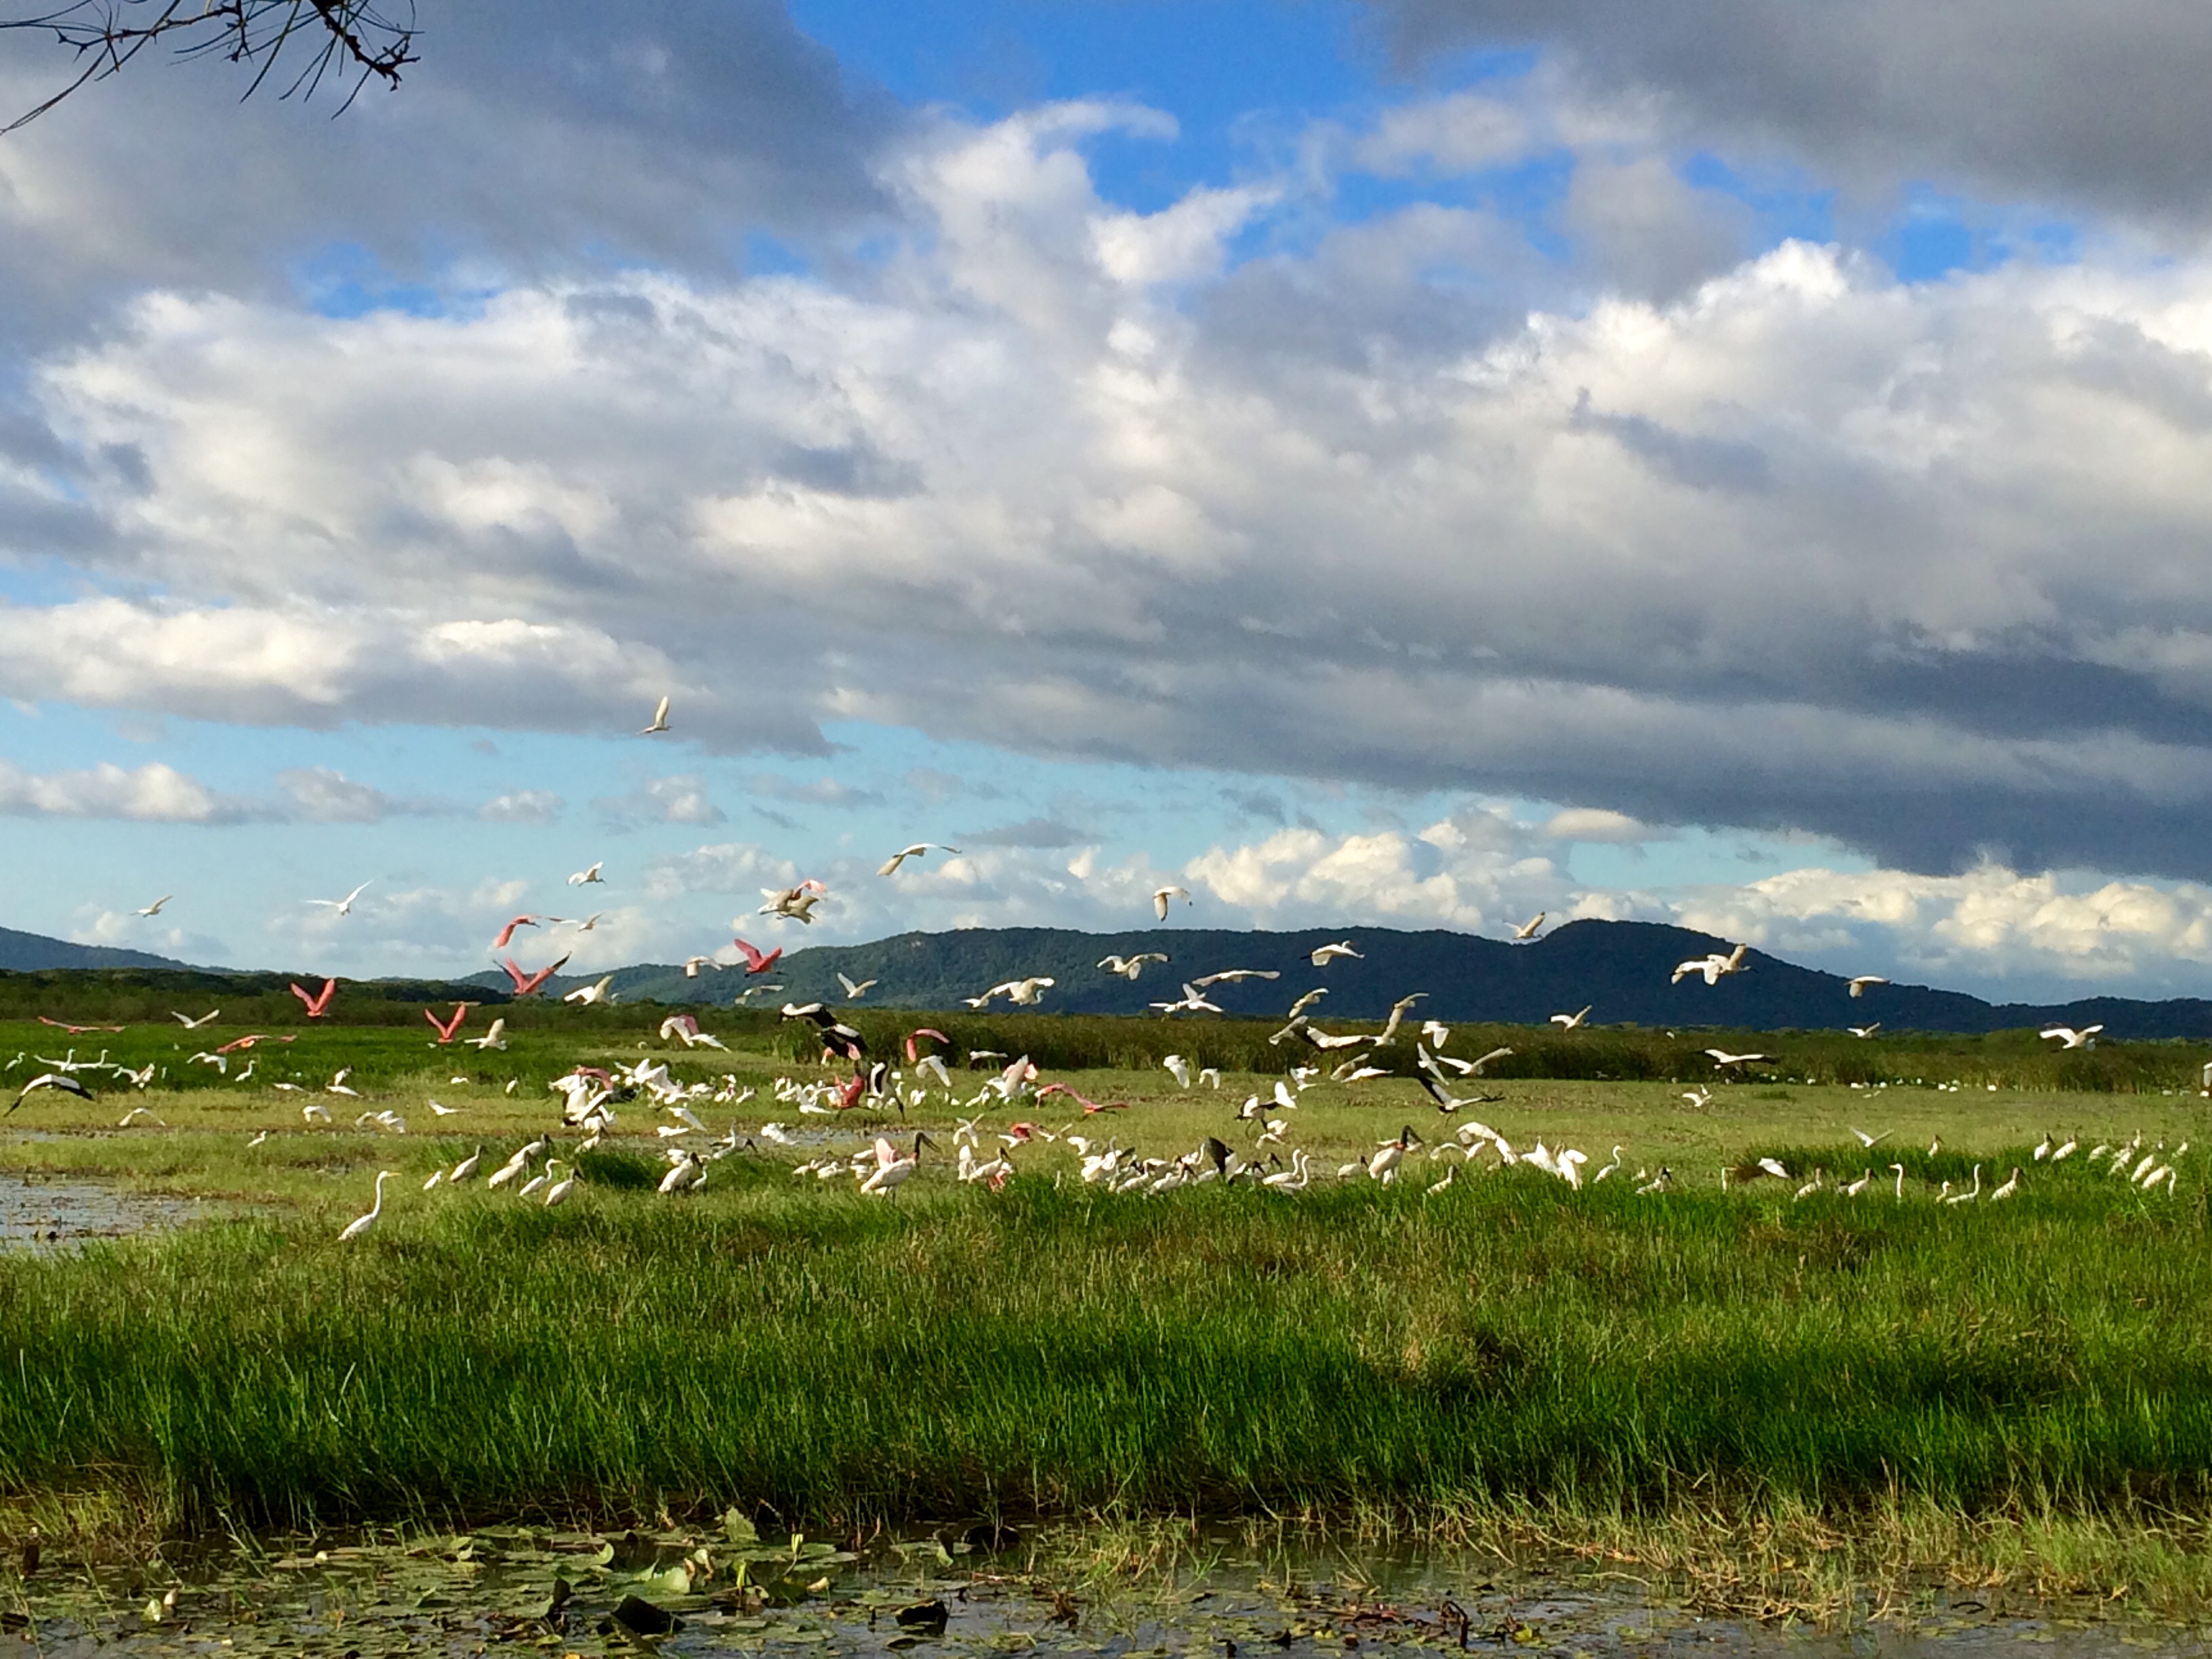 Variety of birds enjoying the wetlands, photo credit Rancho Humo.